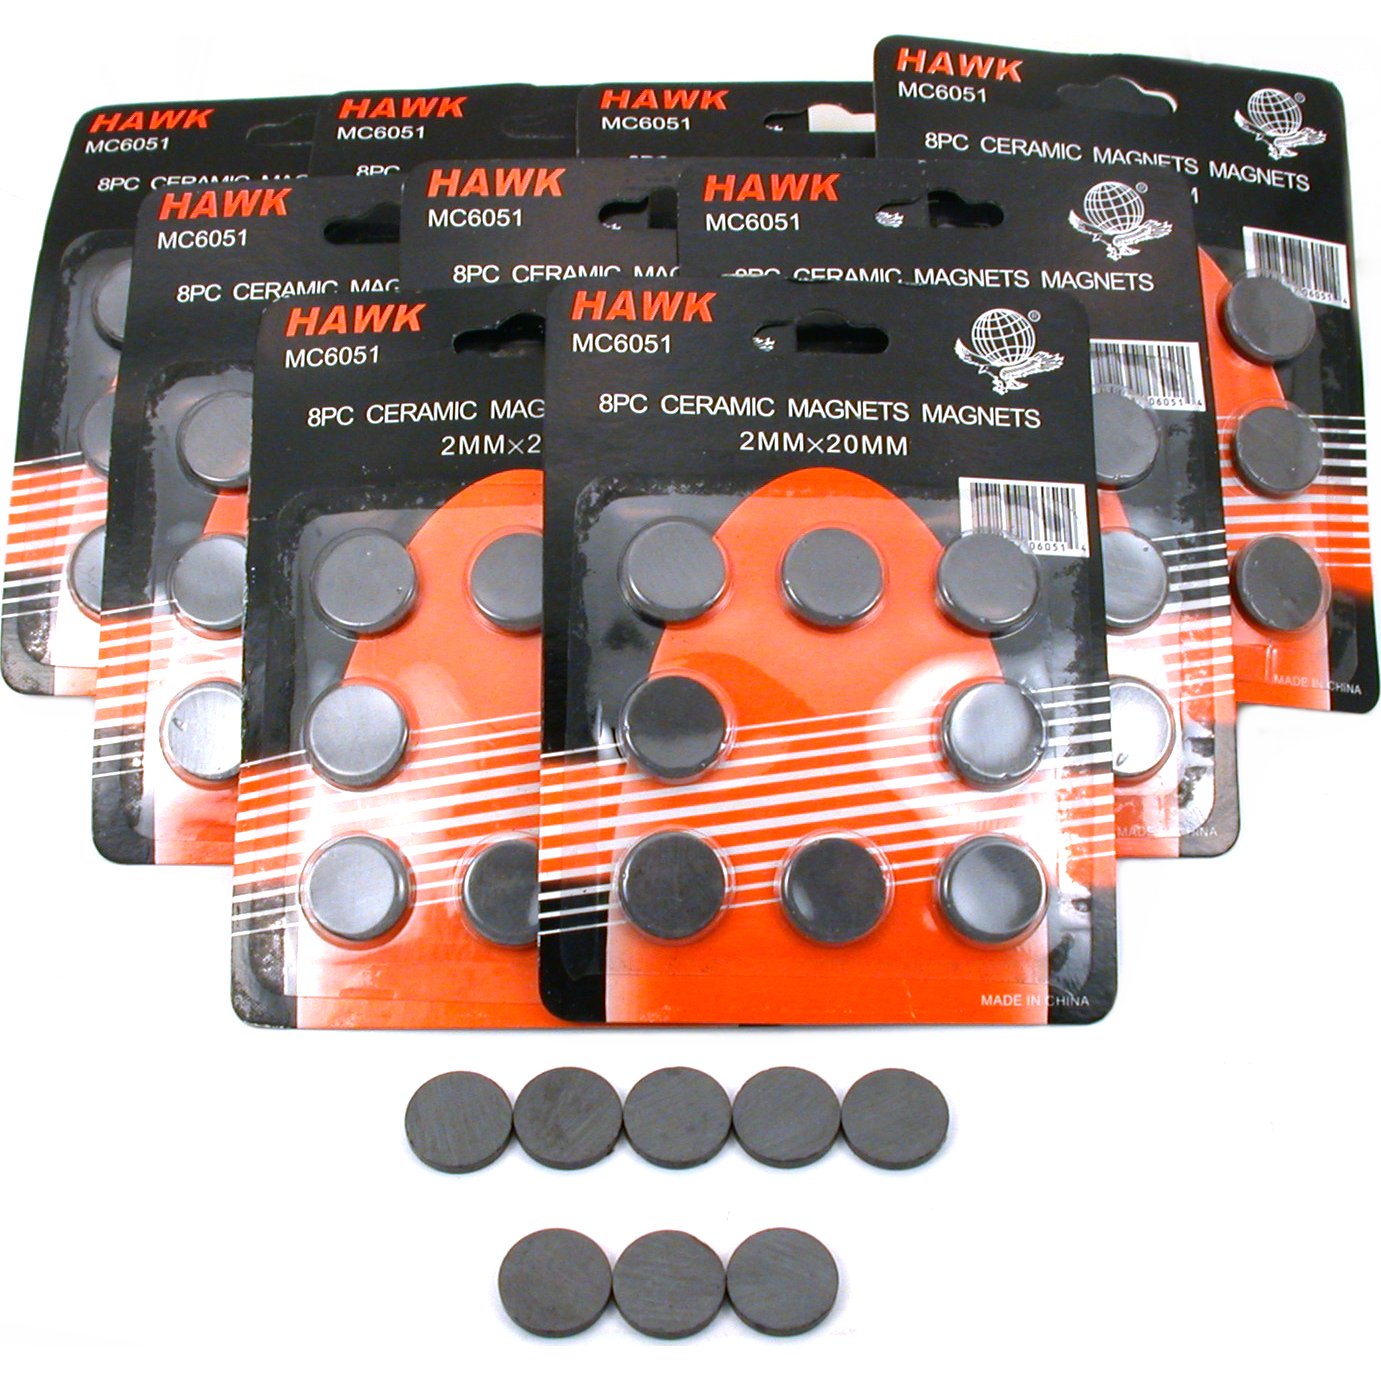  Ceramic Magnets, Round Disk Magnets Craft Magnets